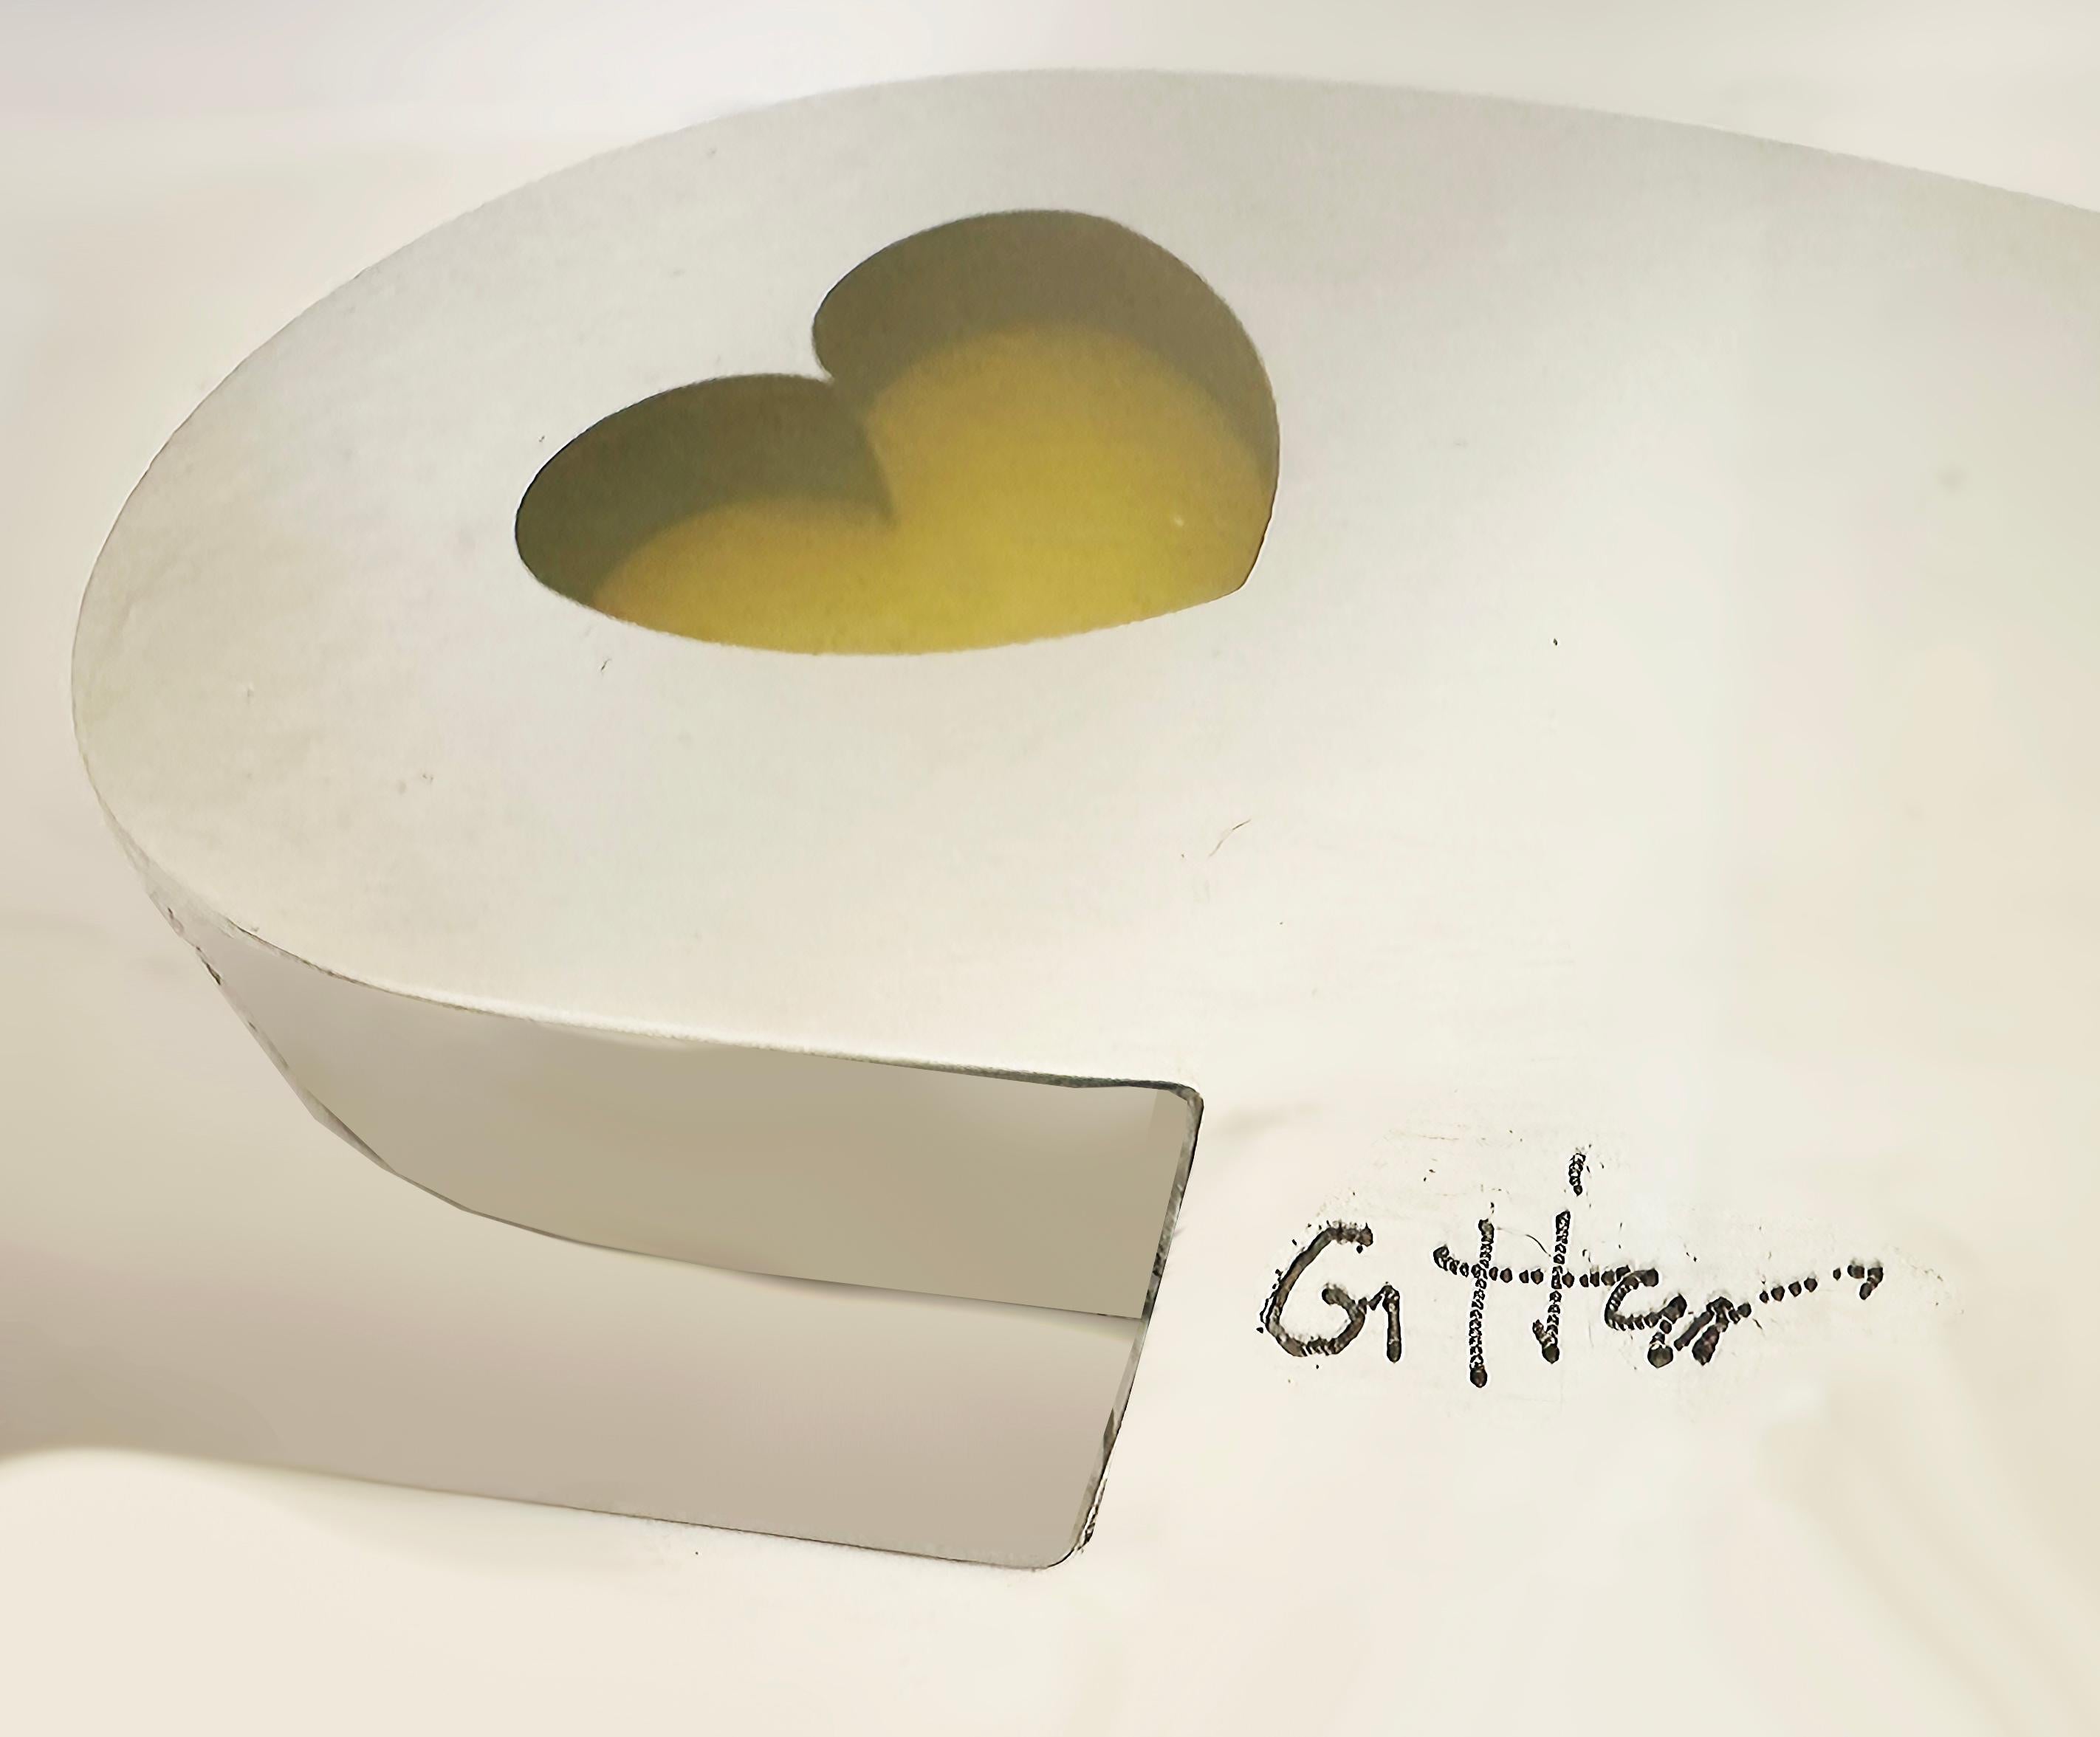   Aluminum, Epoxy Resin Interlocking Hearts Sculpture by Michael Gitter For Sale 1